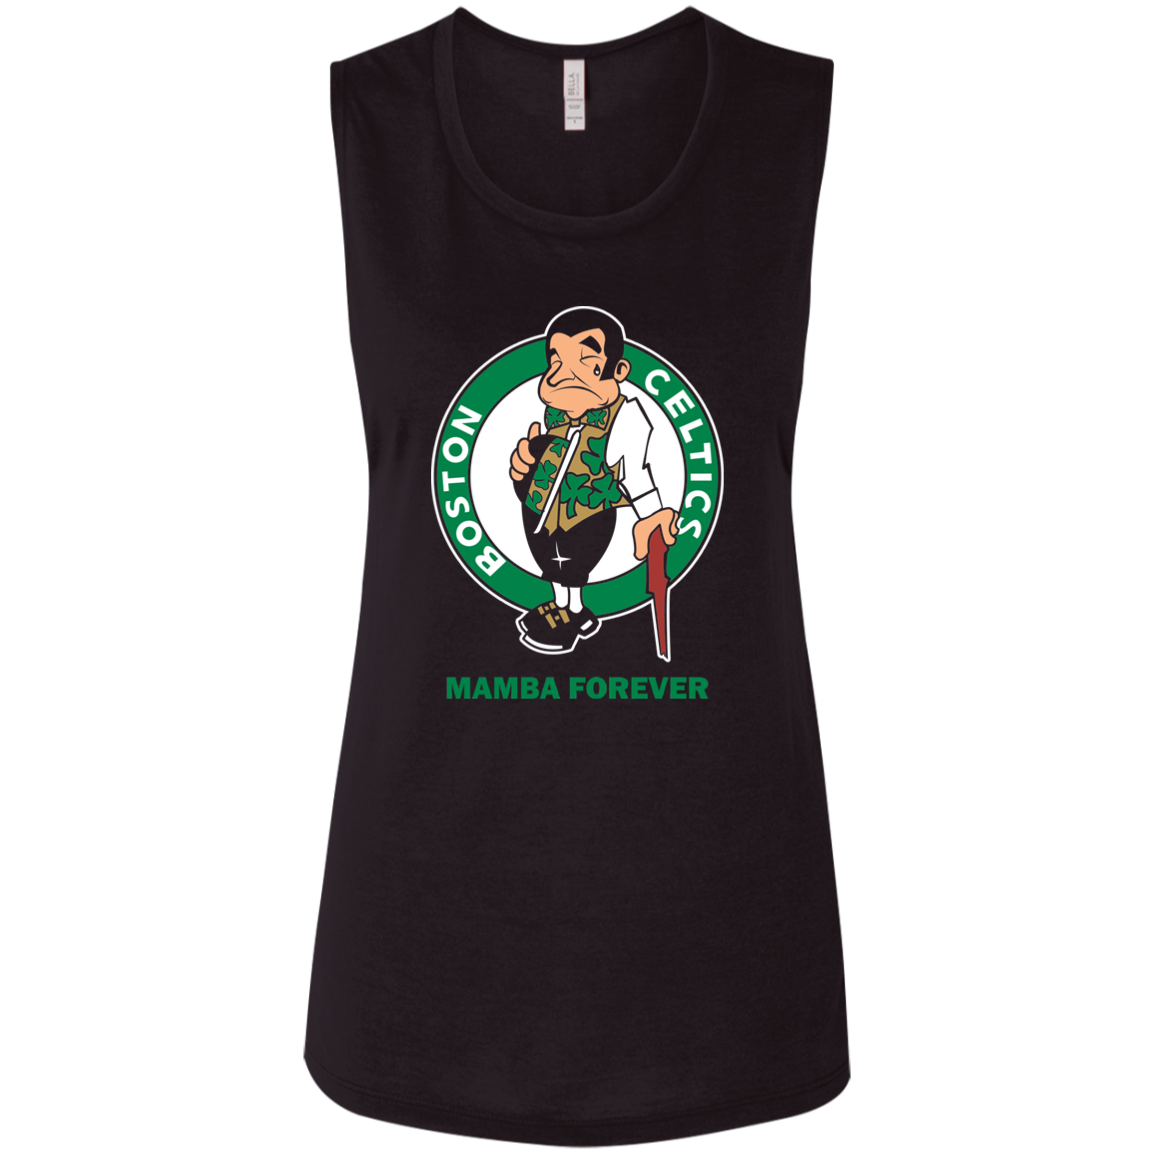 ArtichokeUSA Custom Design. RIP Kobe. Mamba Forever. Celtics / Lakers Fan Art Tribute. Ladies' Flowy Muscle Tank